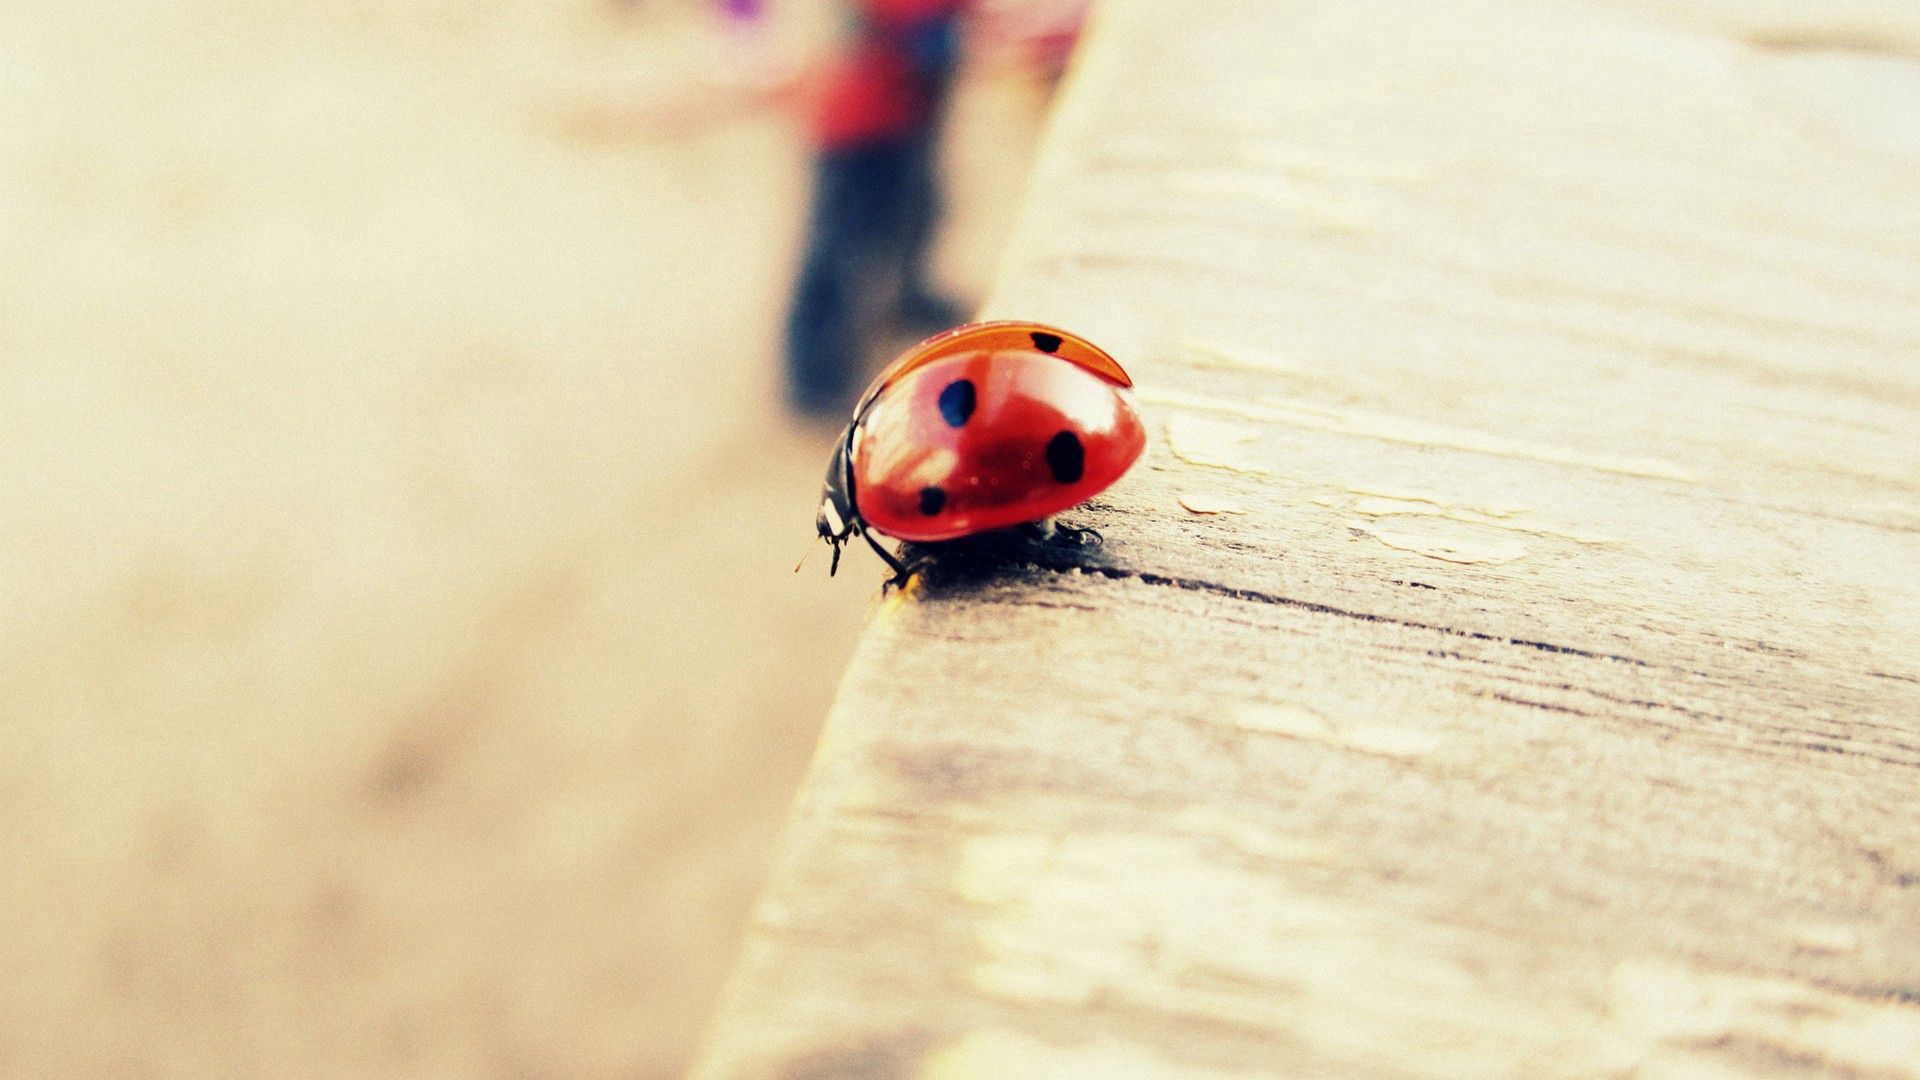 Cool HD Wallpaper ladybug, board, surface, light